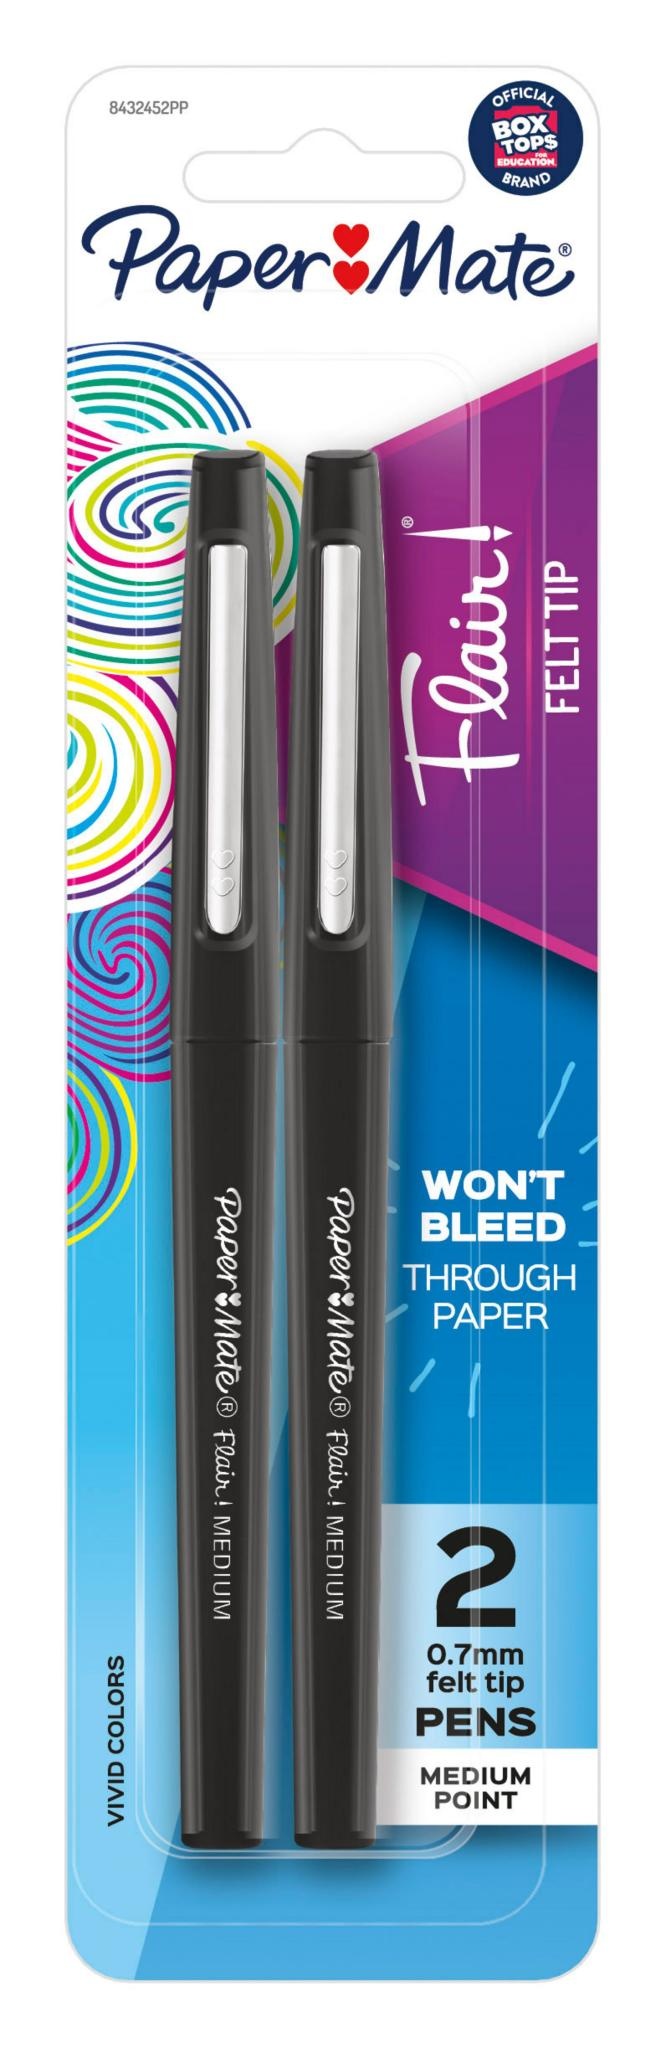 Papermate Felt Tip Flair Pens Vivid Color 4 Pack